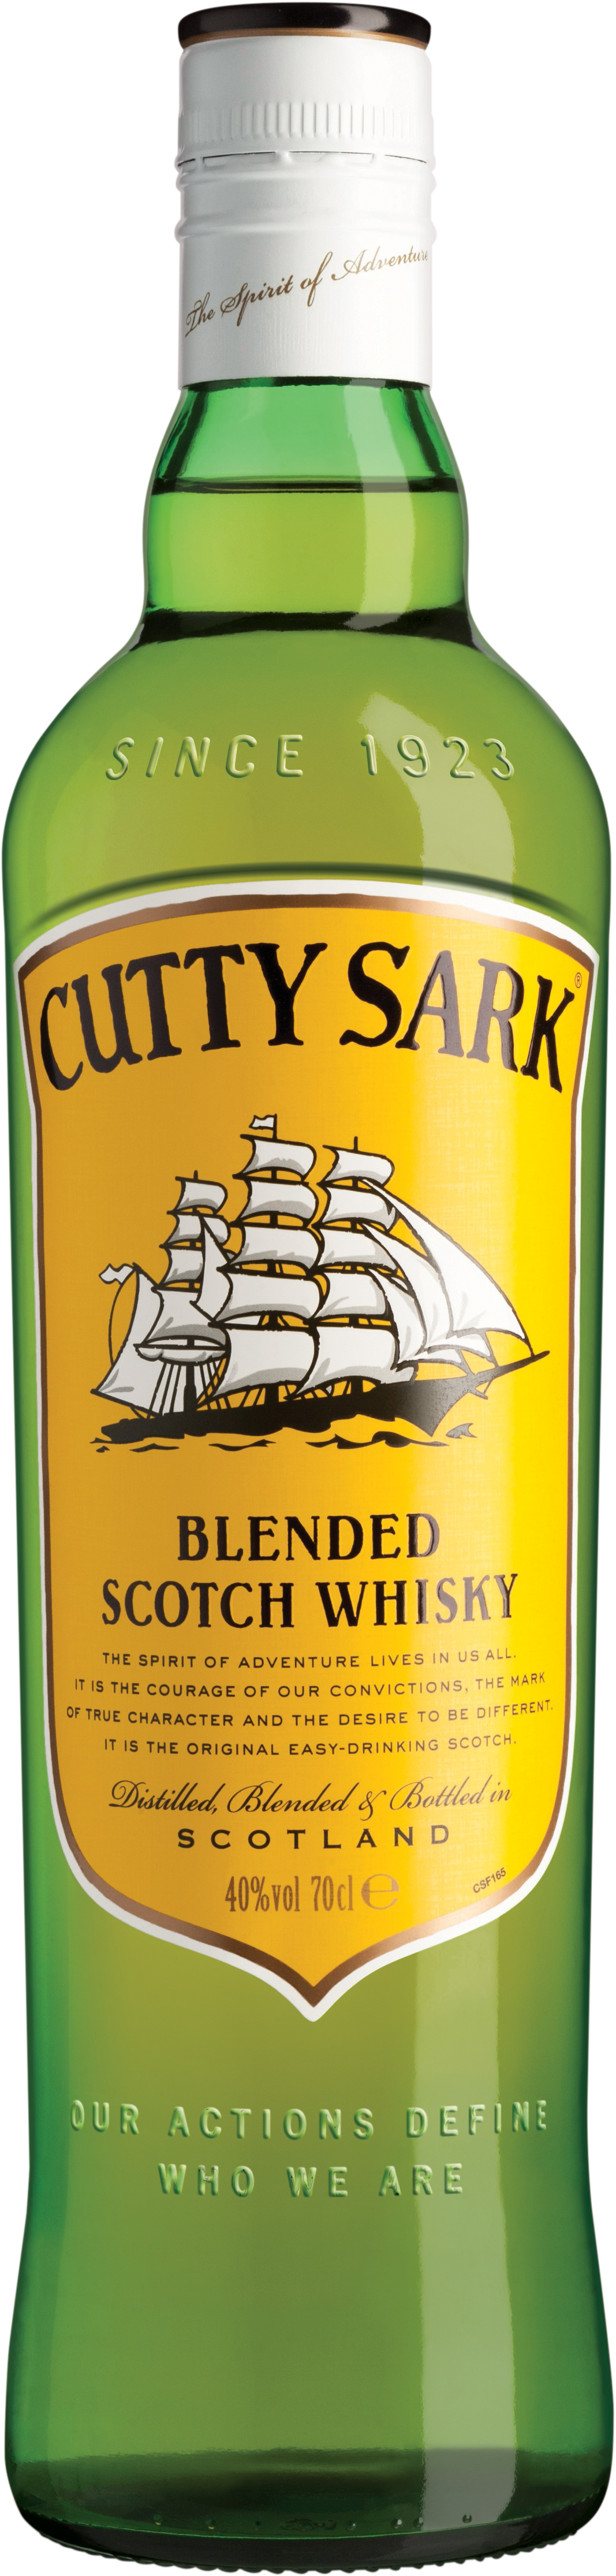 Cutty Sark Whisky 40 % 0.7L